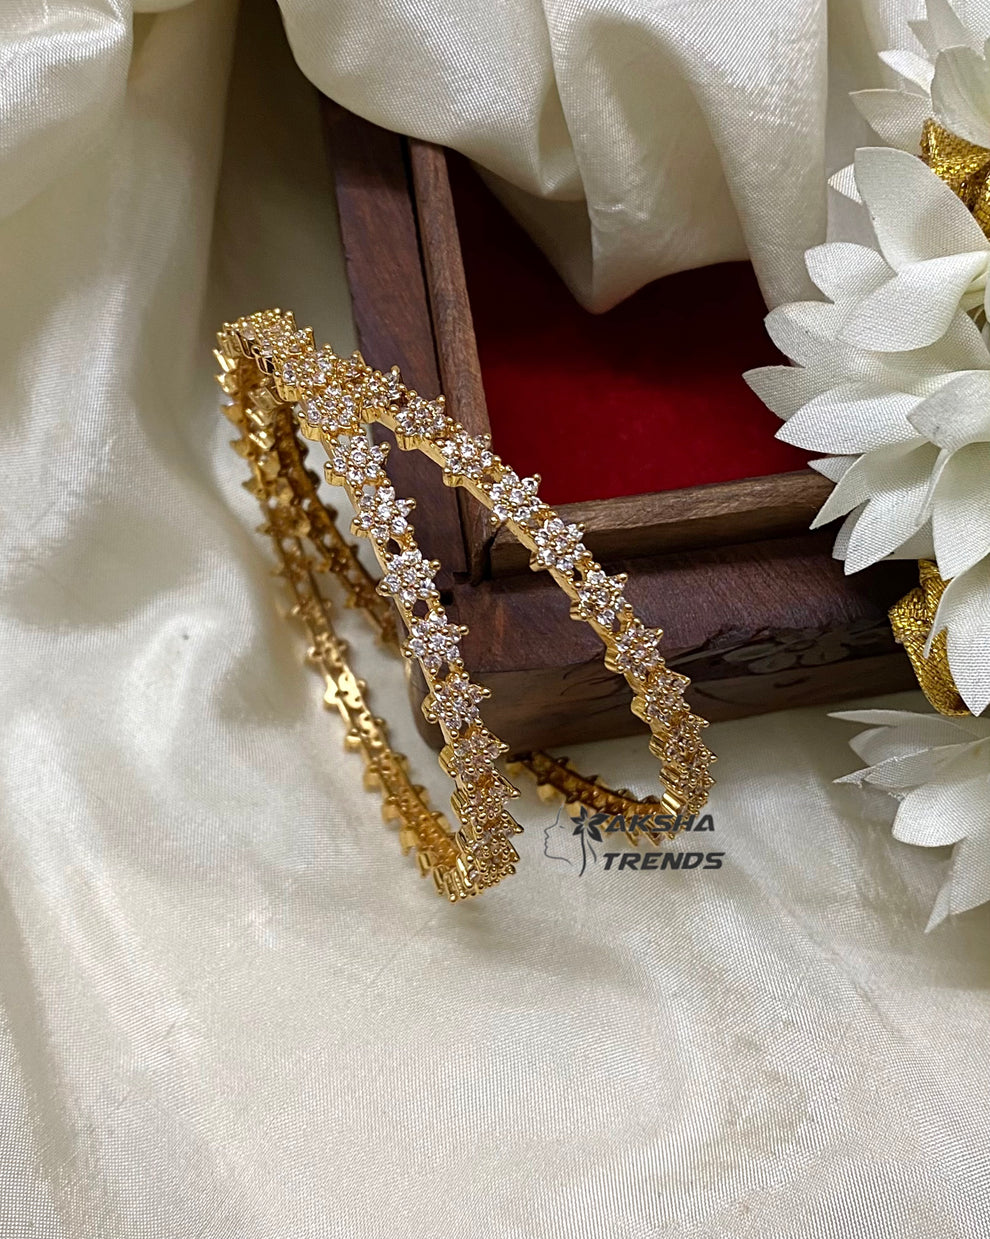 Nakshatra diamond bangles (2pc) Aksha Trends 